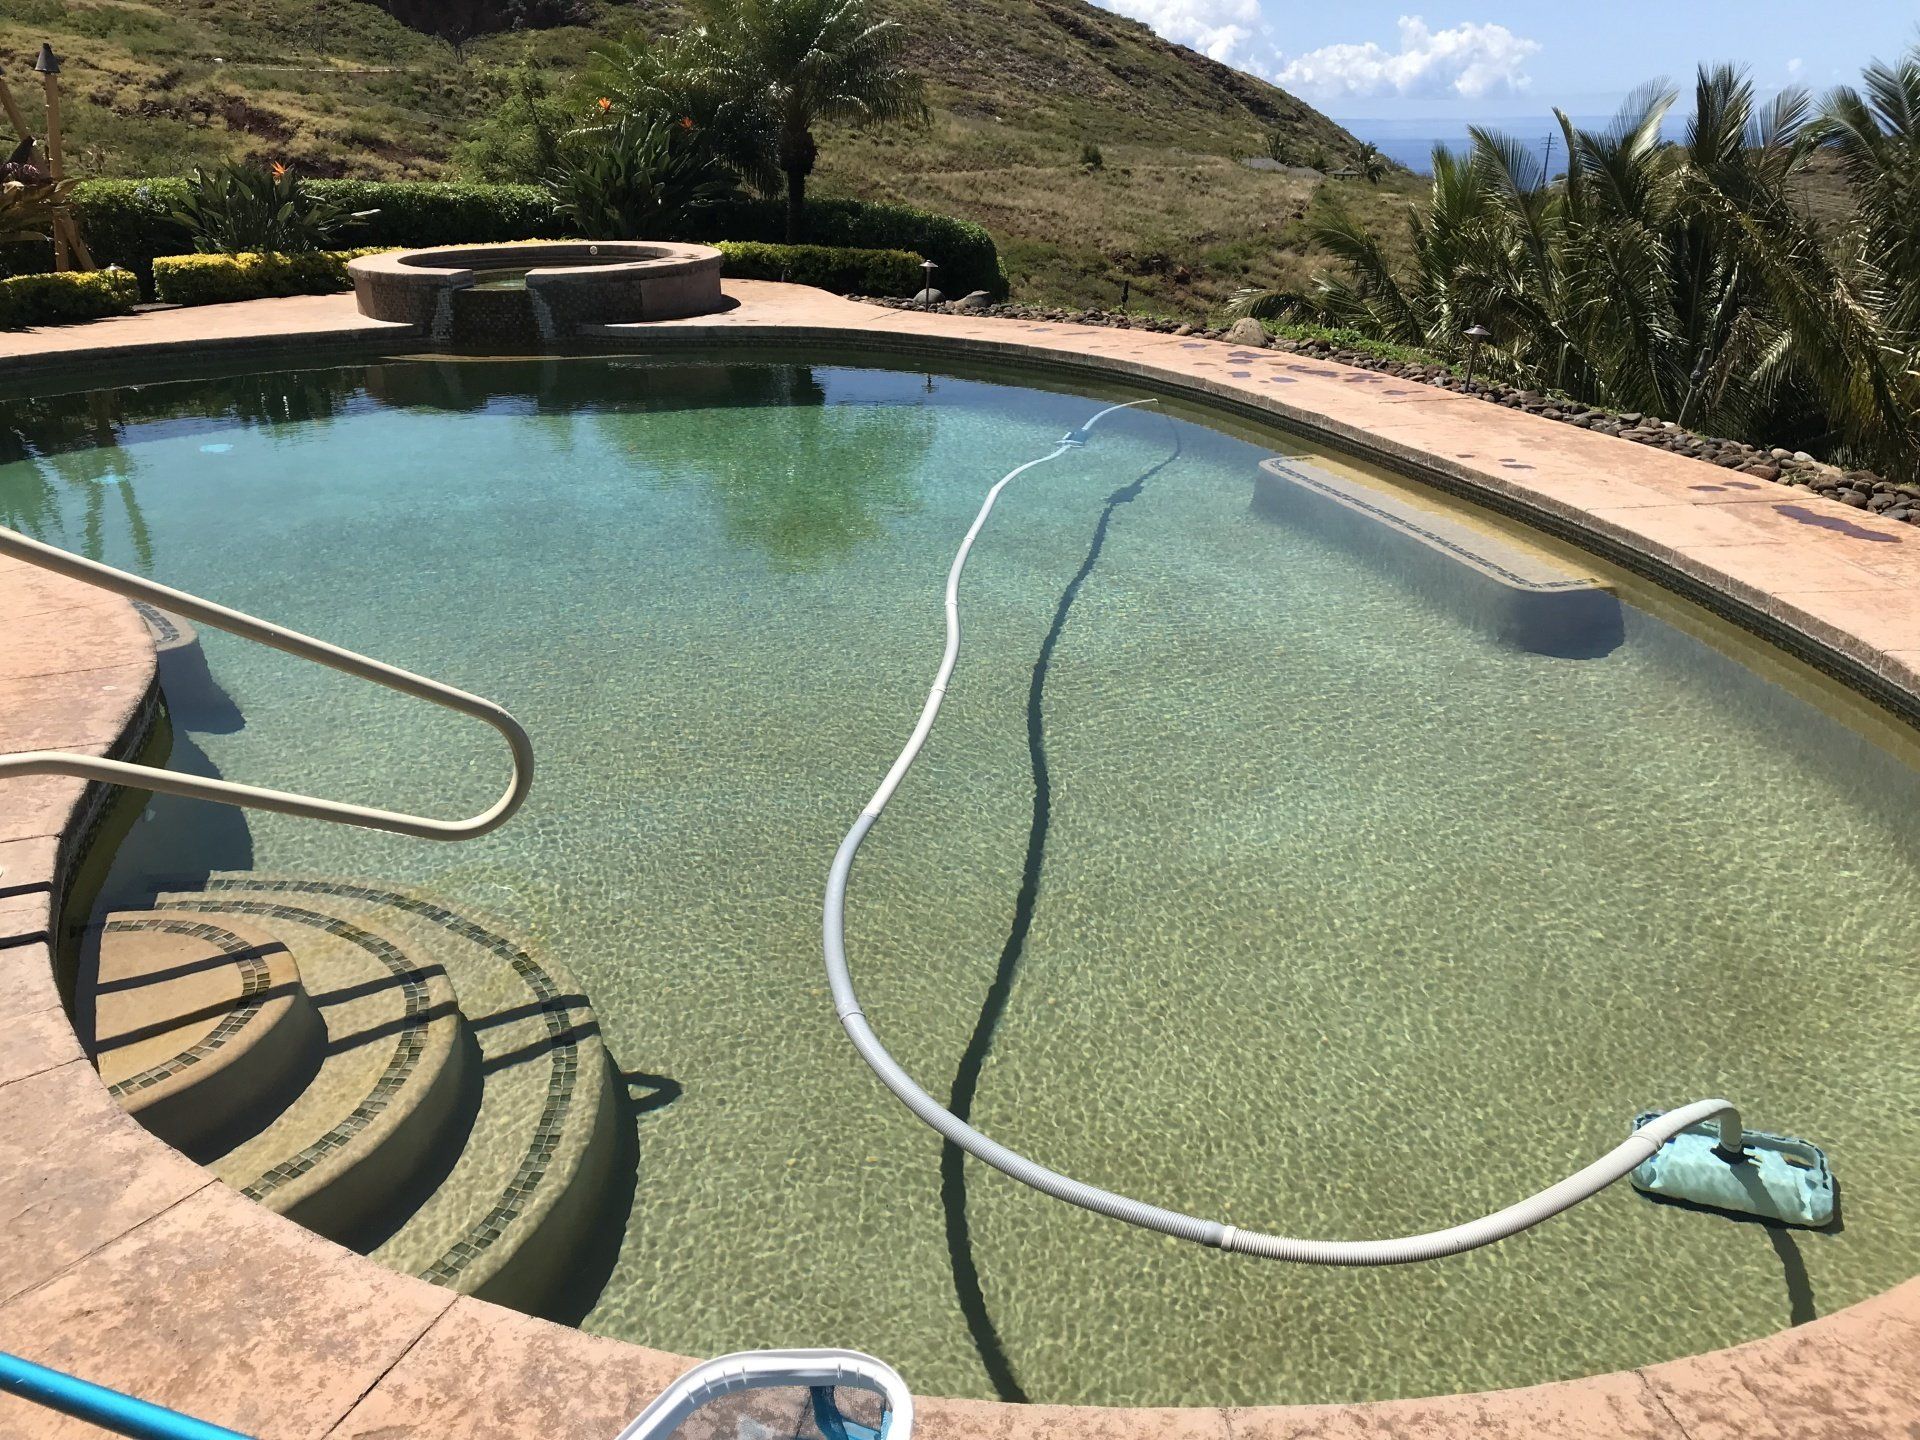 pool cleaning in progress